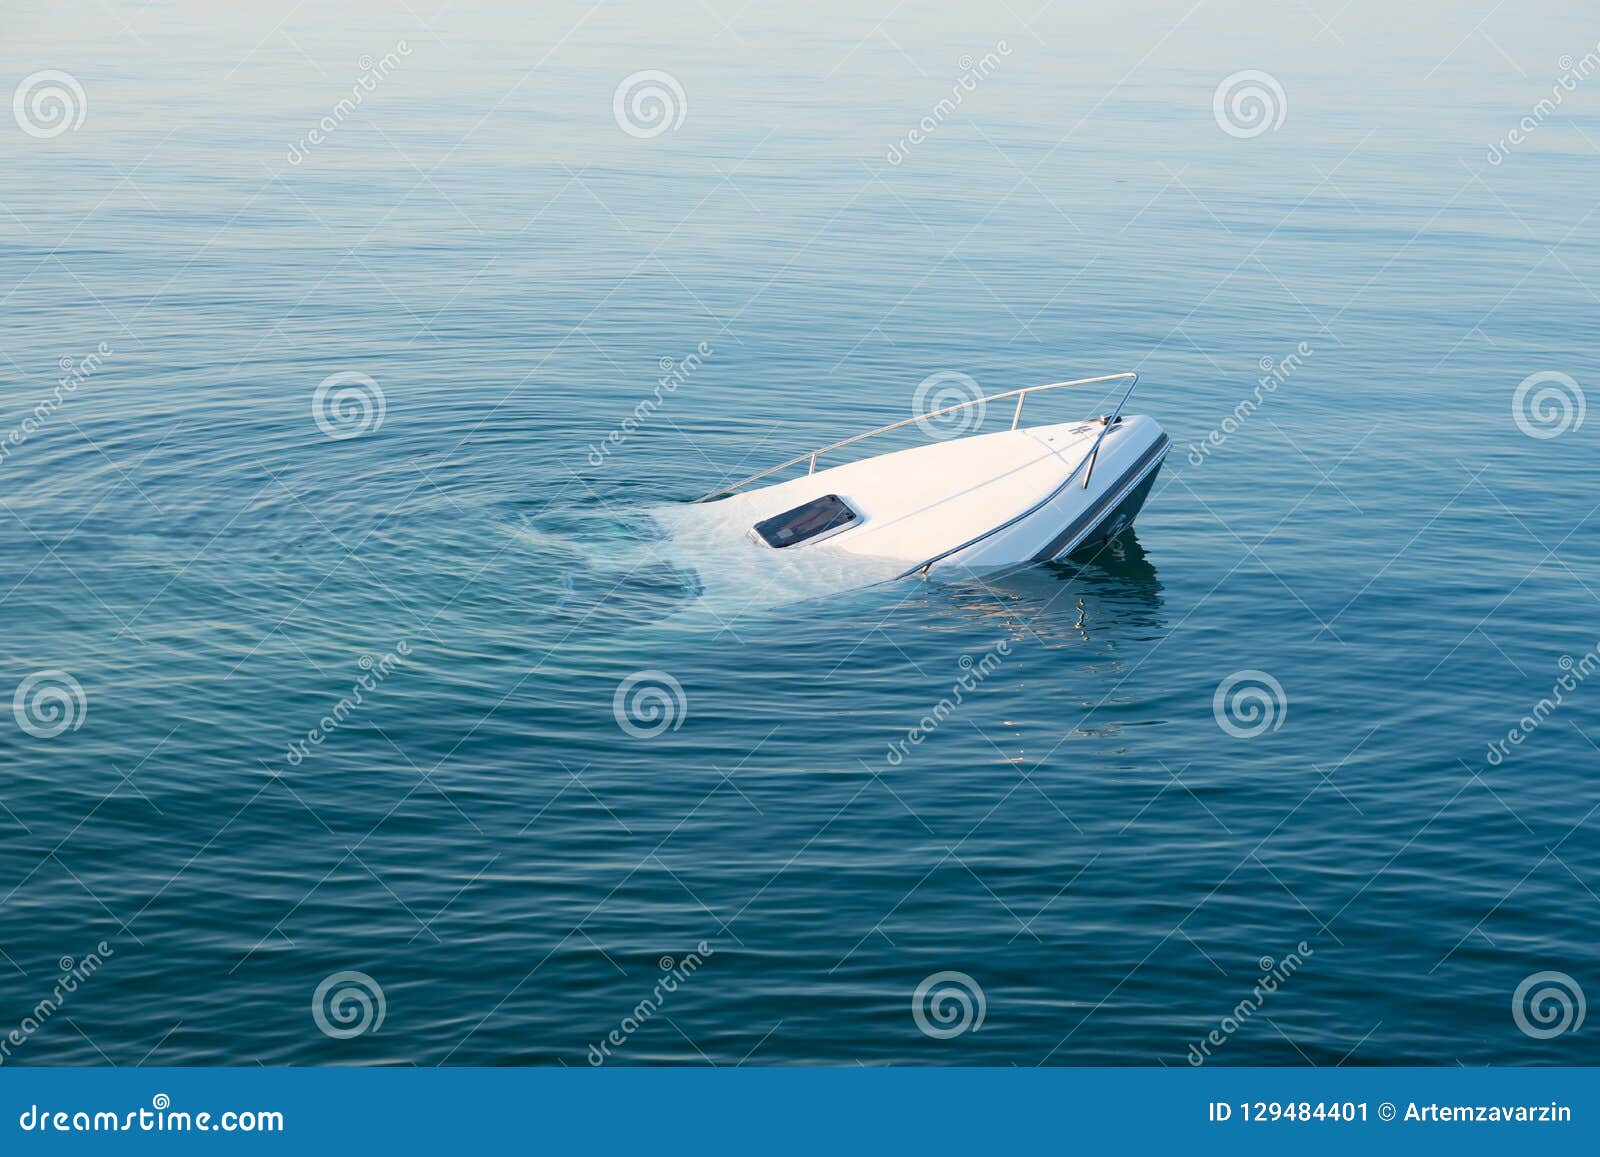 Sinking Modern Large White Boat Goes Underwater Stock Image